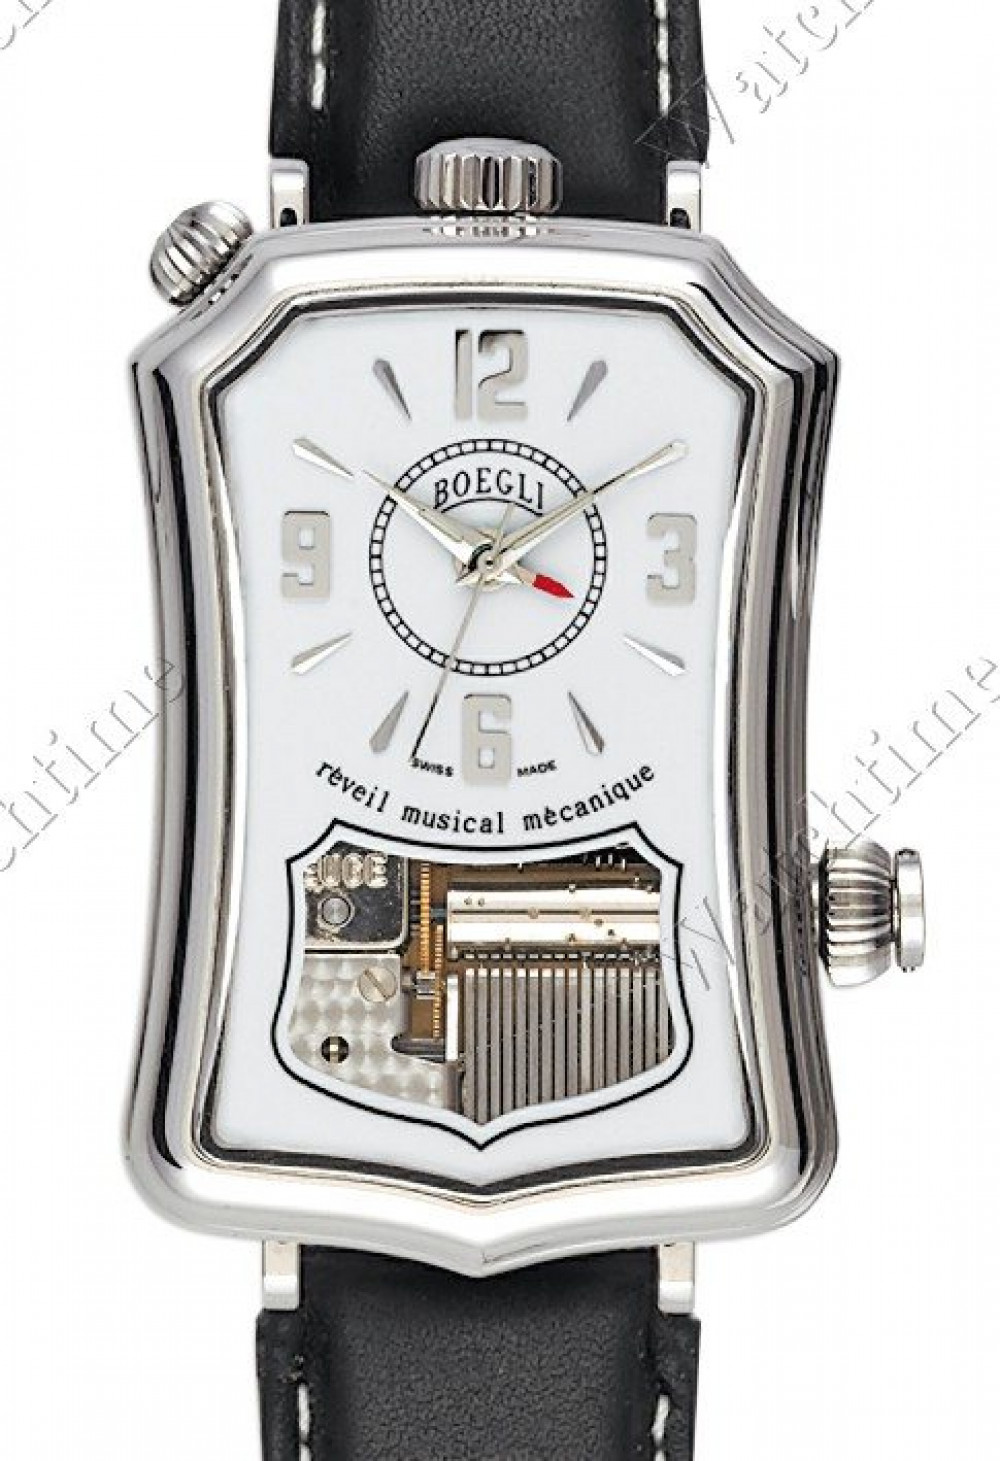 Zegarek firmy Boegli, model Contemporain M 653